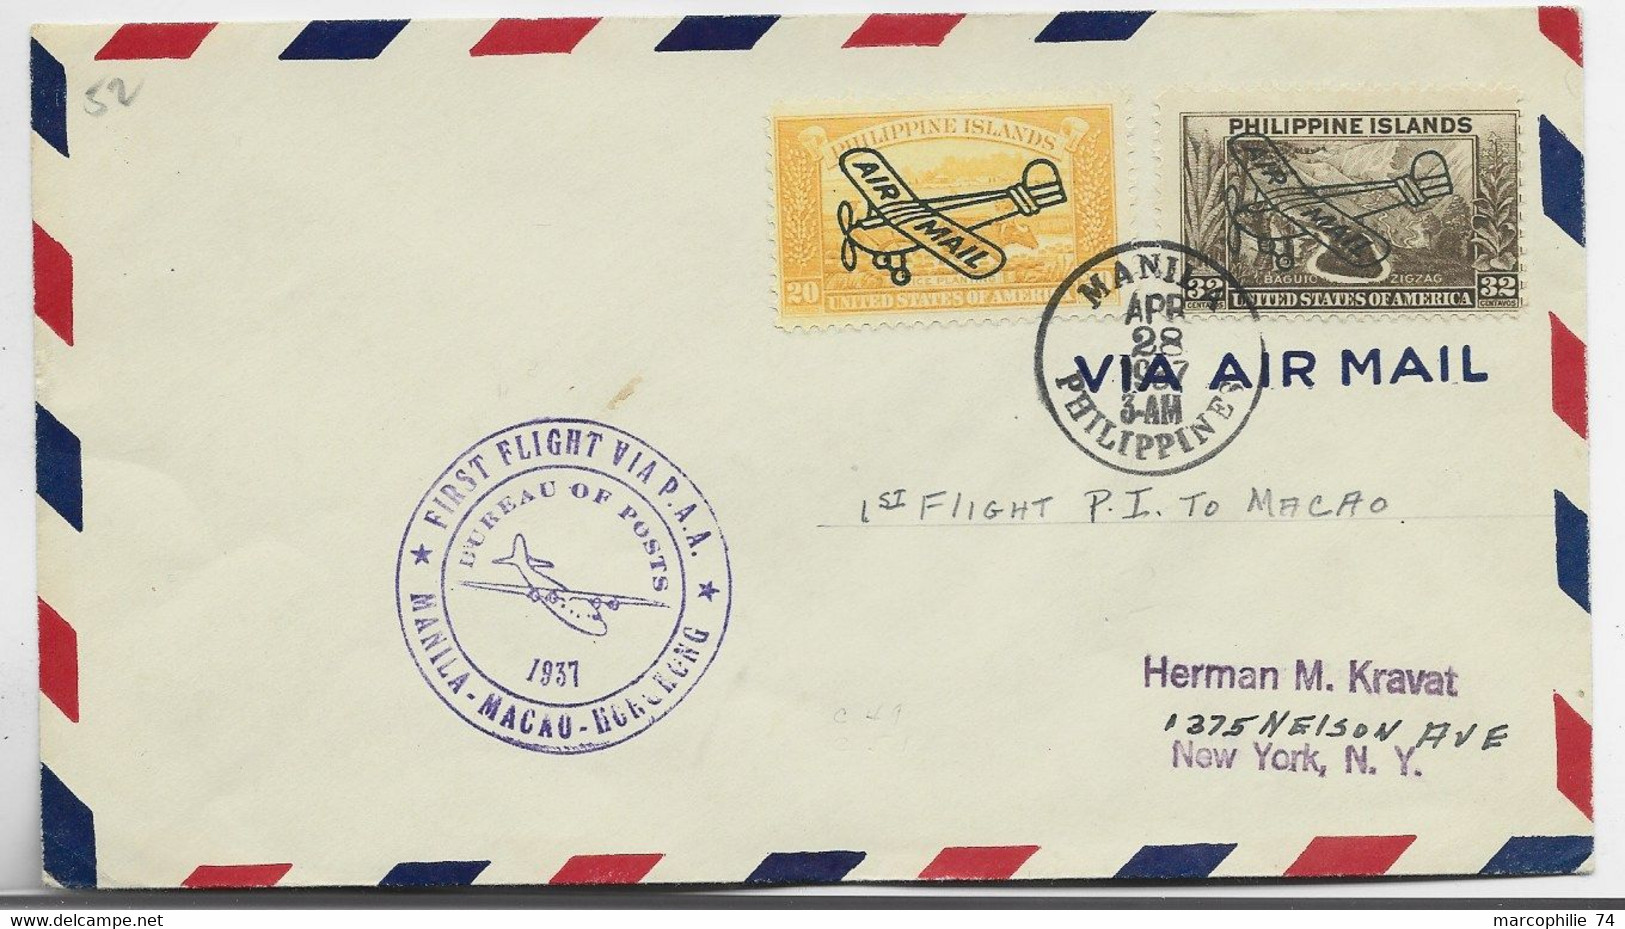 PHILIPPINE ISLANDS MANILLA LETTRE COVER AIR MAIL FIRST FLIGHT ASIA GUAM MACAO APR 28 1937 TO USA - Posta Aerea